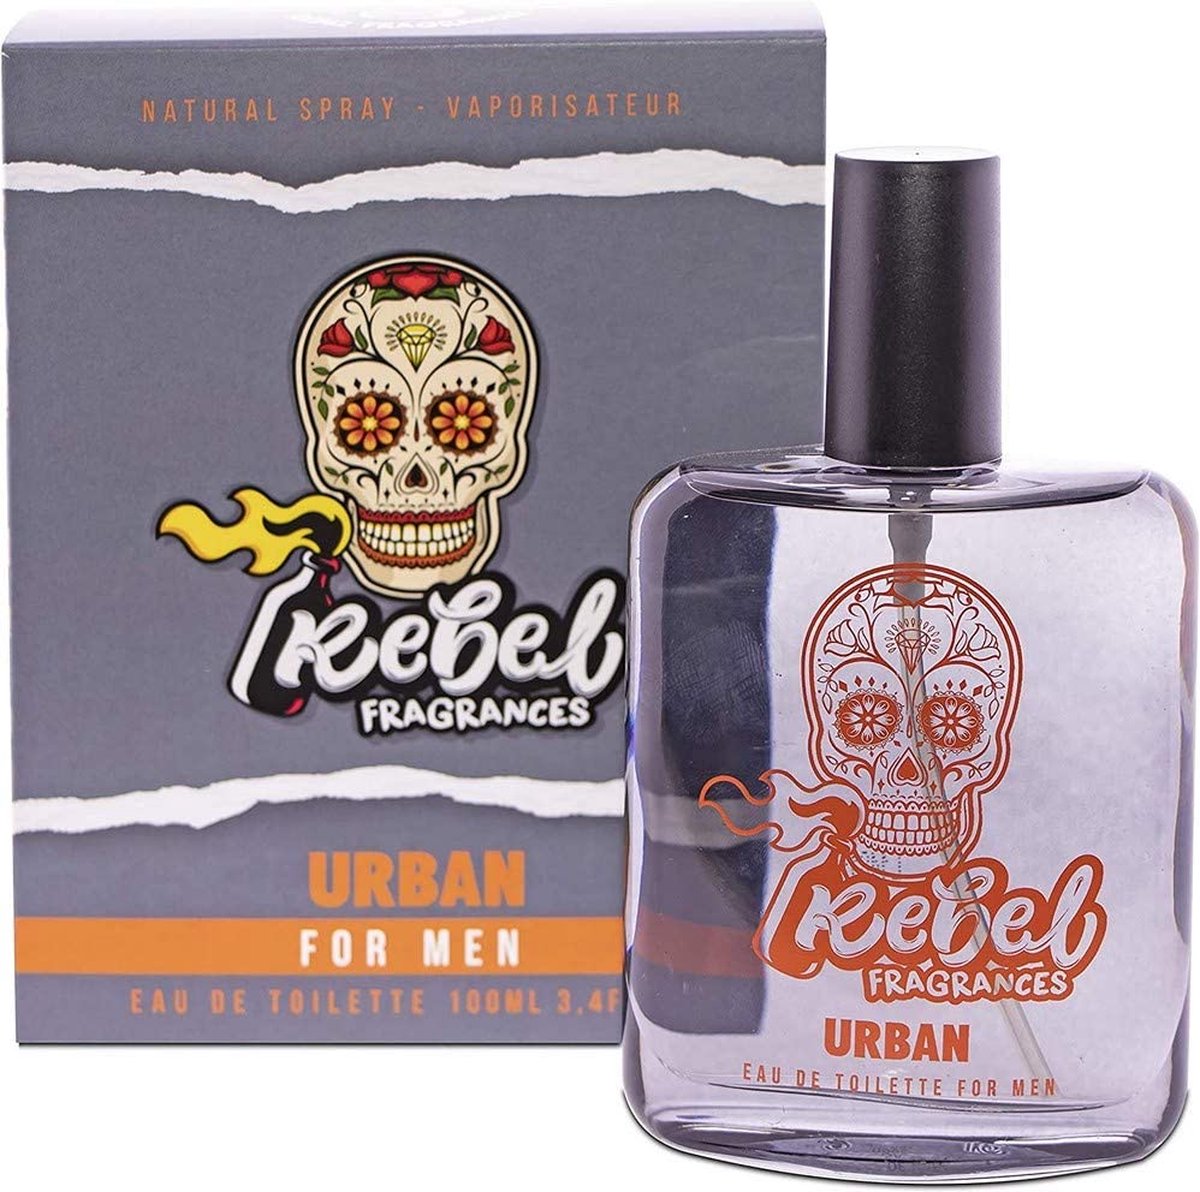 Rebel Fragrances Urban Eau De Toilette Mannen - 100 ml - Mannen Parfum - Mannen Cadeautjes - Verleidelijk en Intrigerend Herengeur